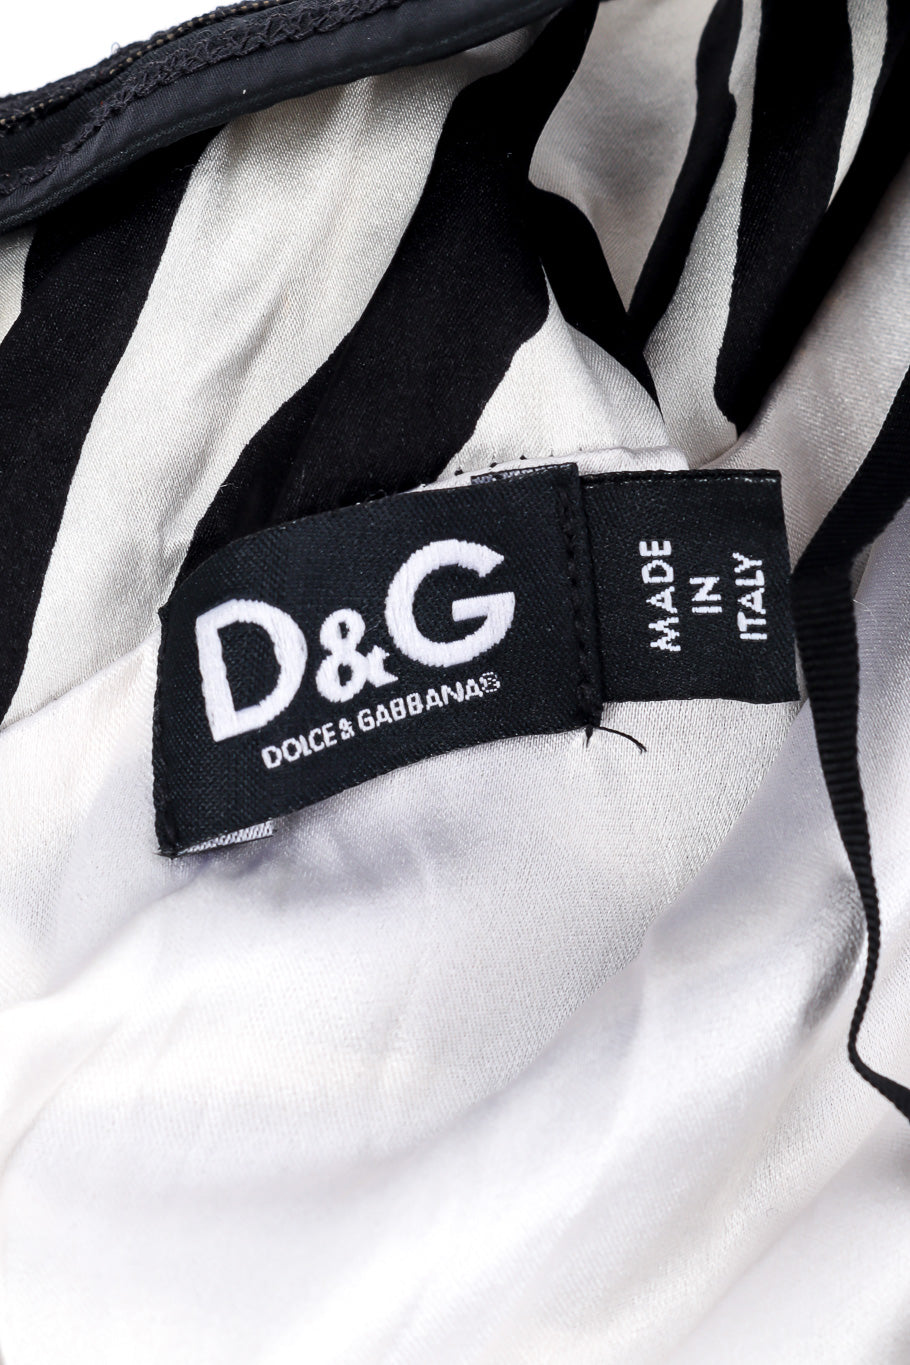 Dolce & Gabbana zebra print bustier tank top designer label @recessla